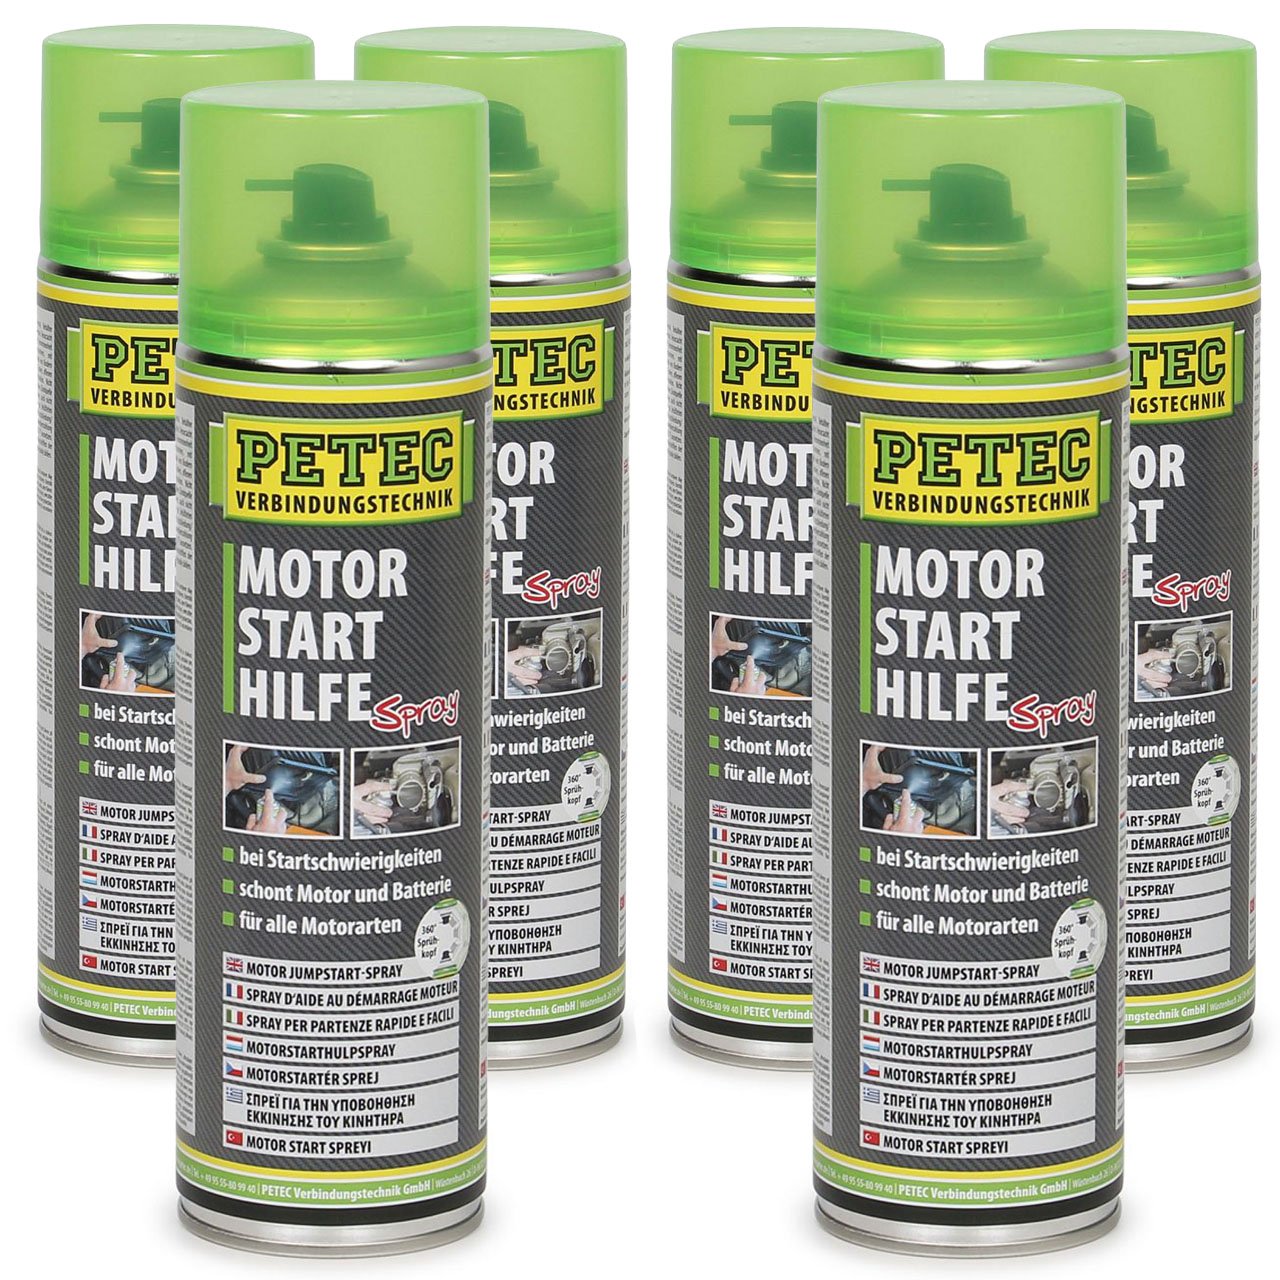 PETEC Motorstarthilfe Startpilot Spray 500 ml